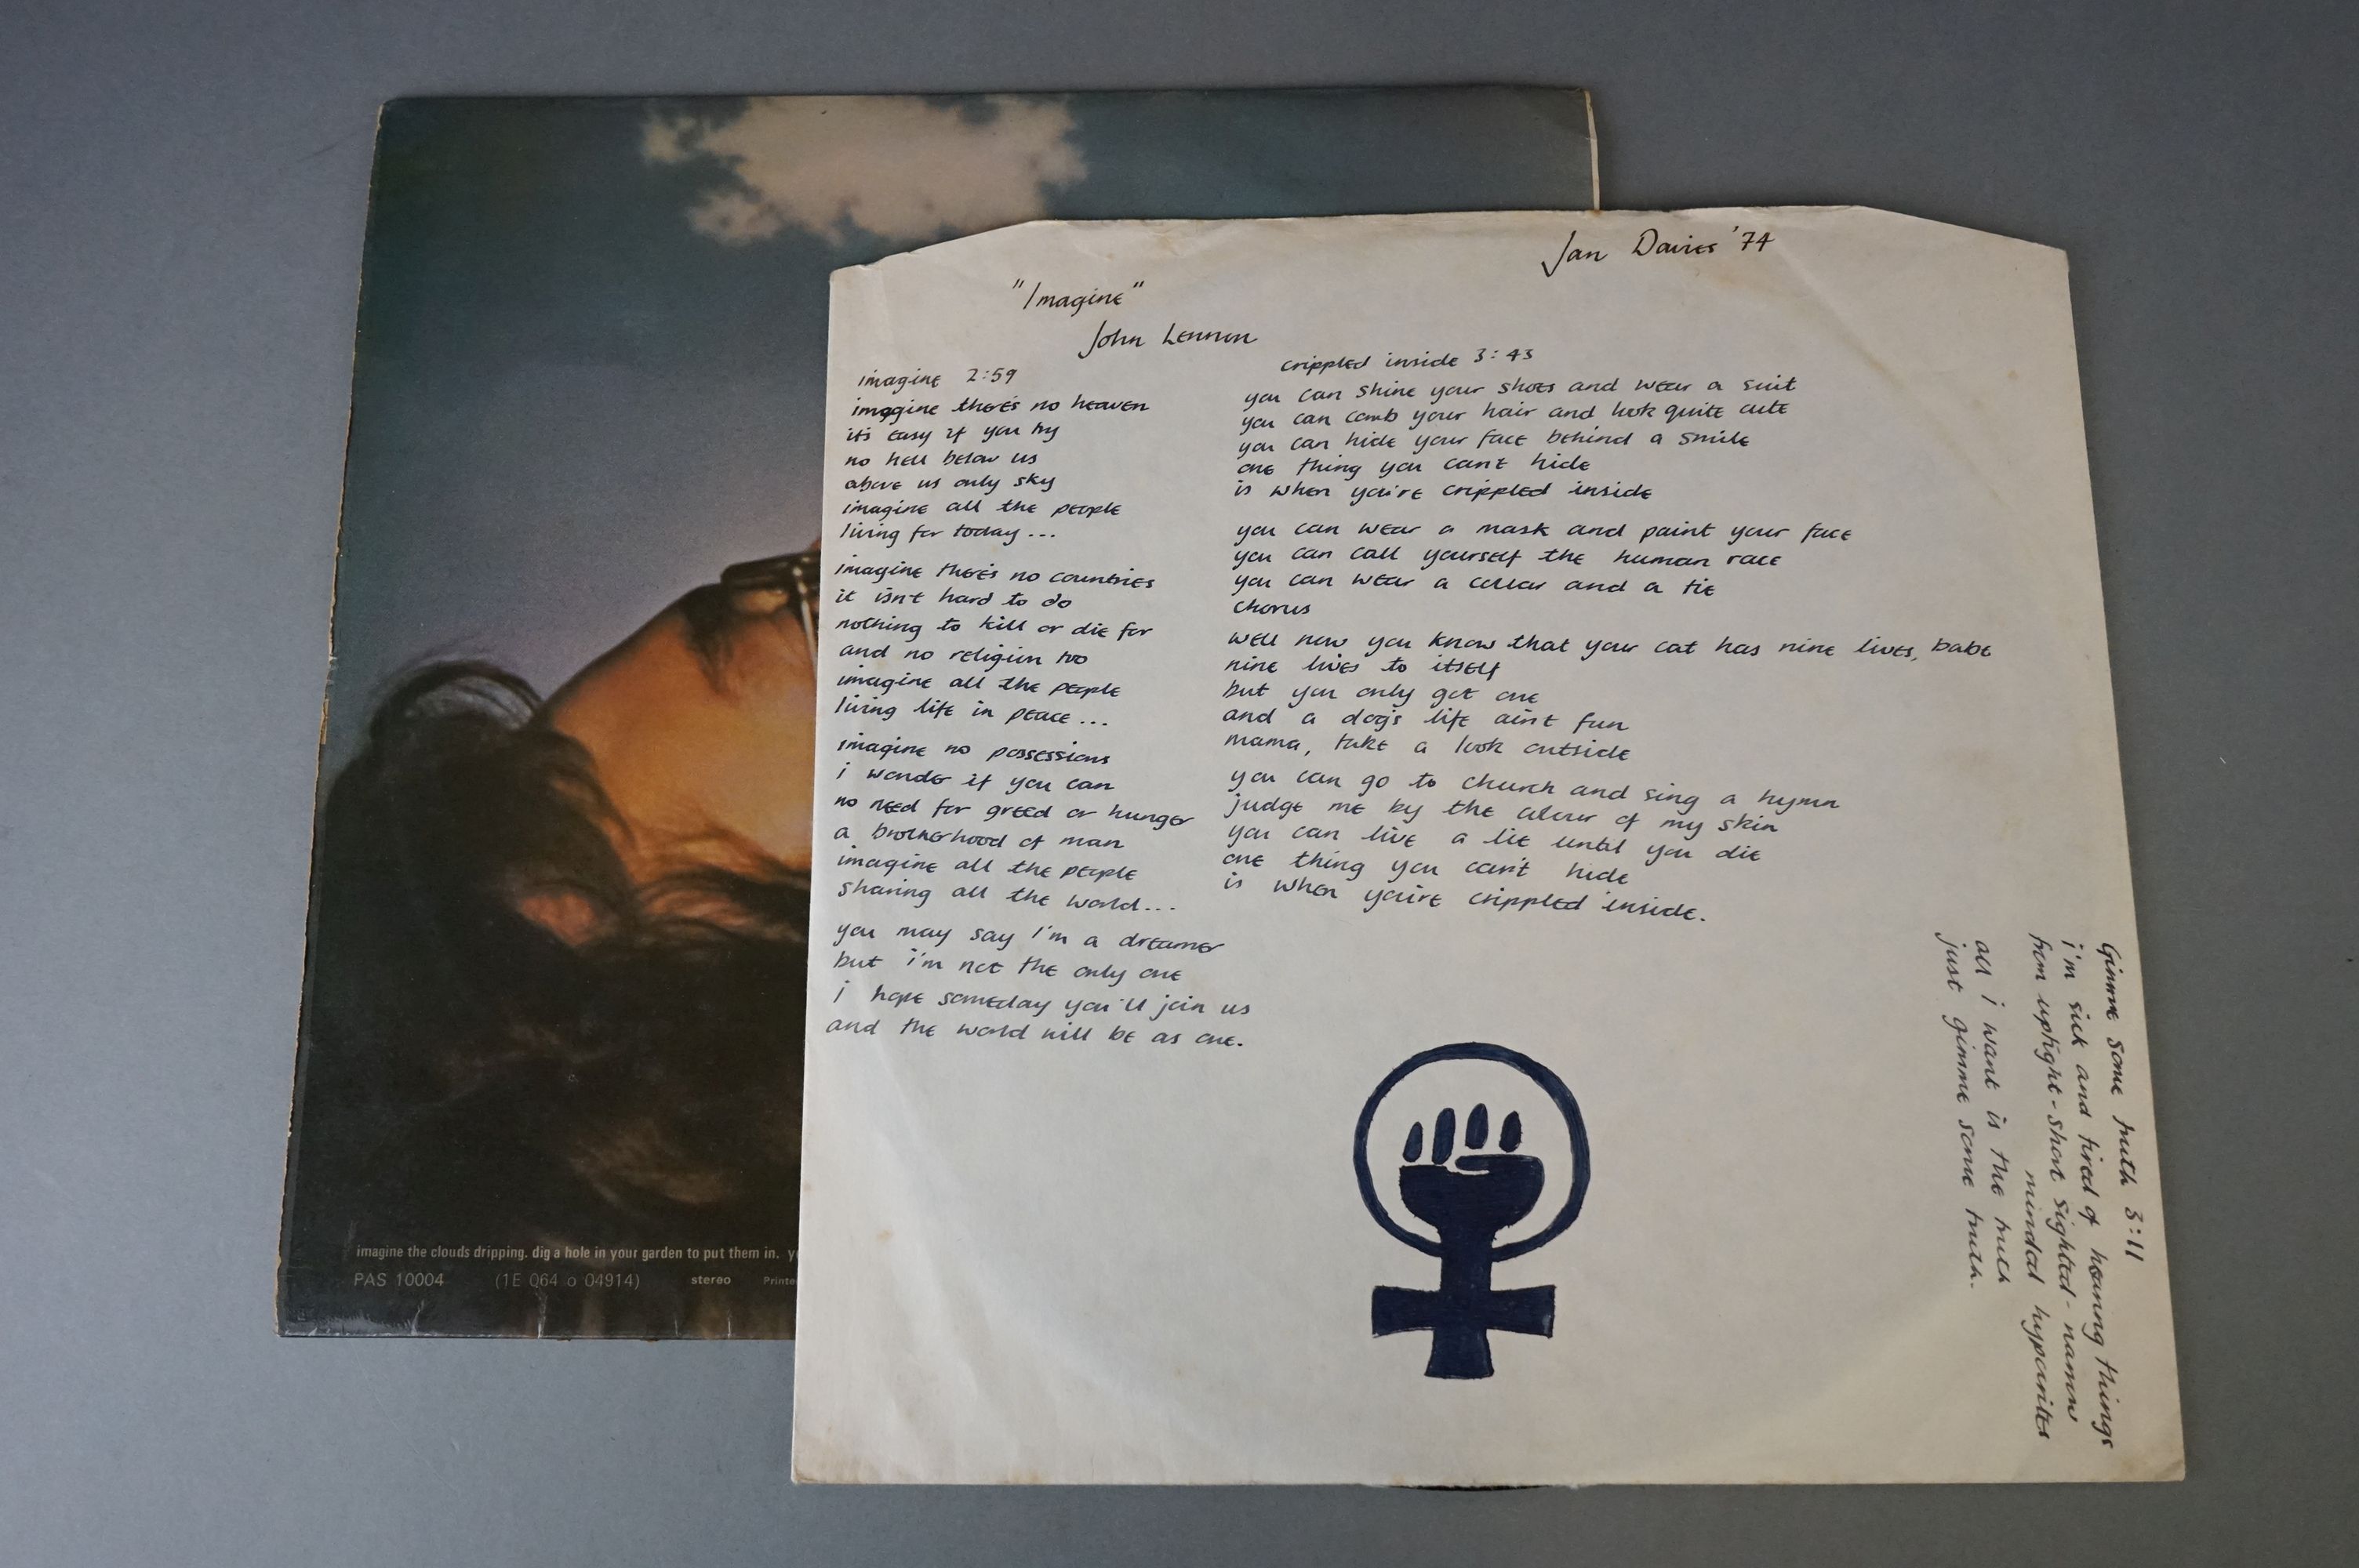 Vinyl - The Beatles & John Lennon 3 LP's to include Let It Be (PCS 7096) Stereo, incorrect inner, - Image 6 of 8